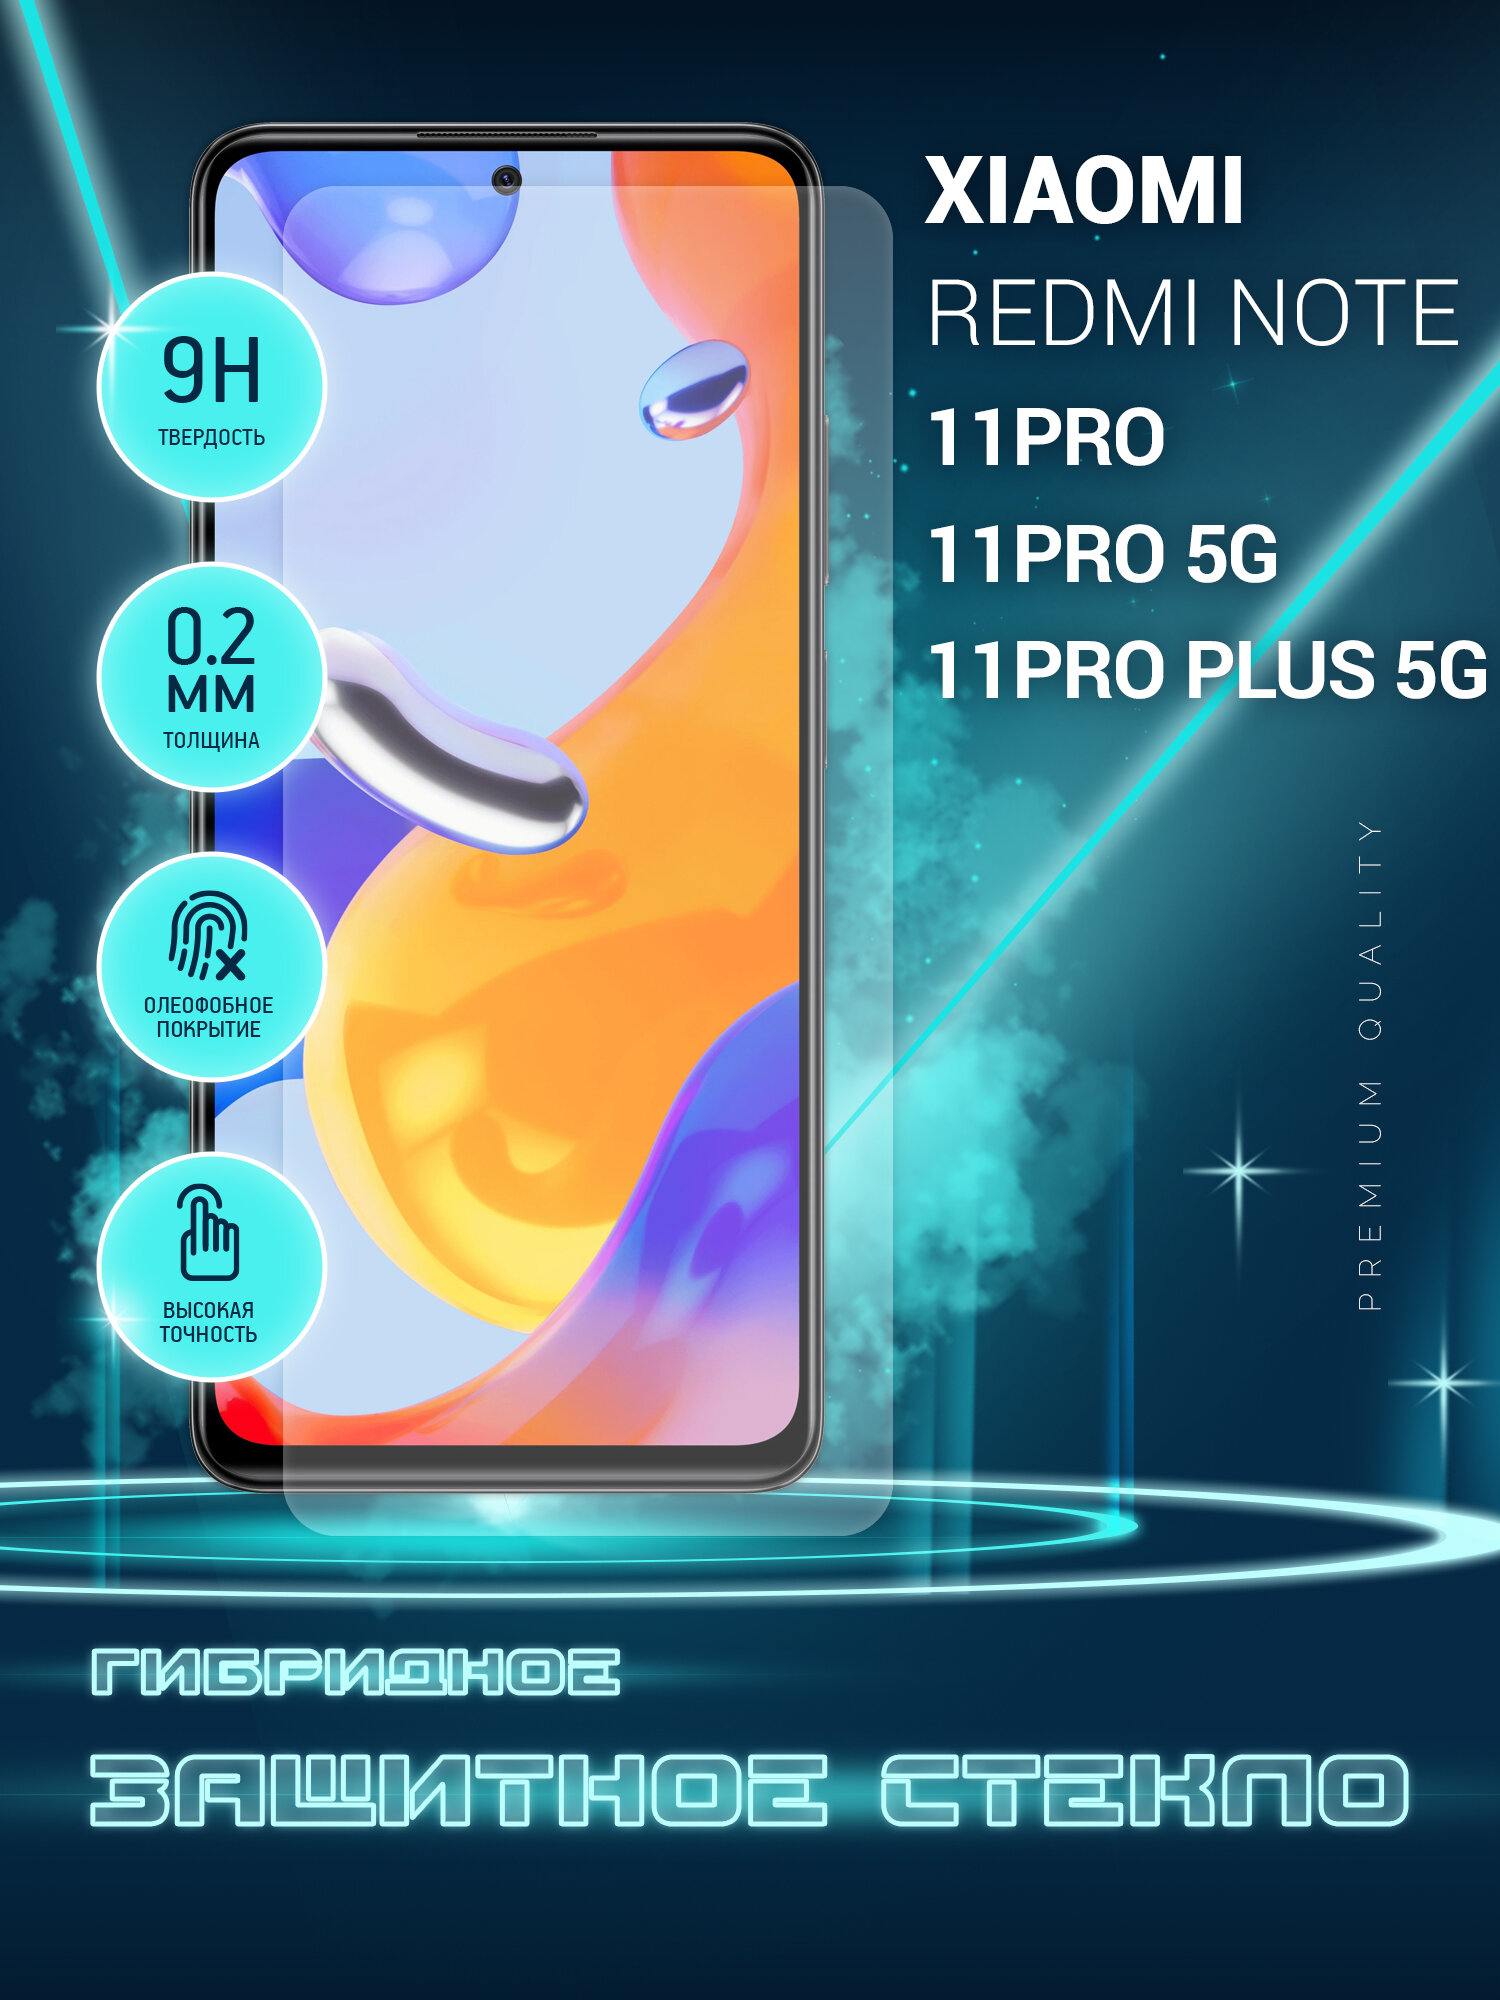 Защитное стекло для Xiaomi Redmi Note 11 Pro 11 Pro 5G 11 Pro Plus 5G на экран гибридное (пленка + стекловолокно) Crystal boost